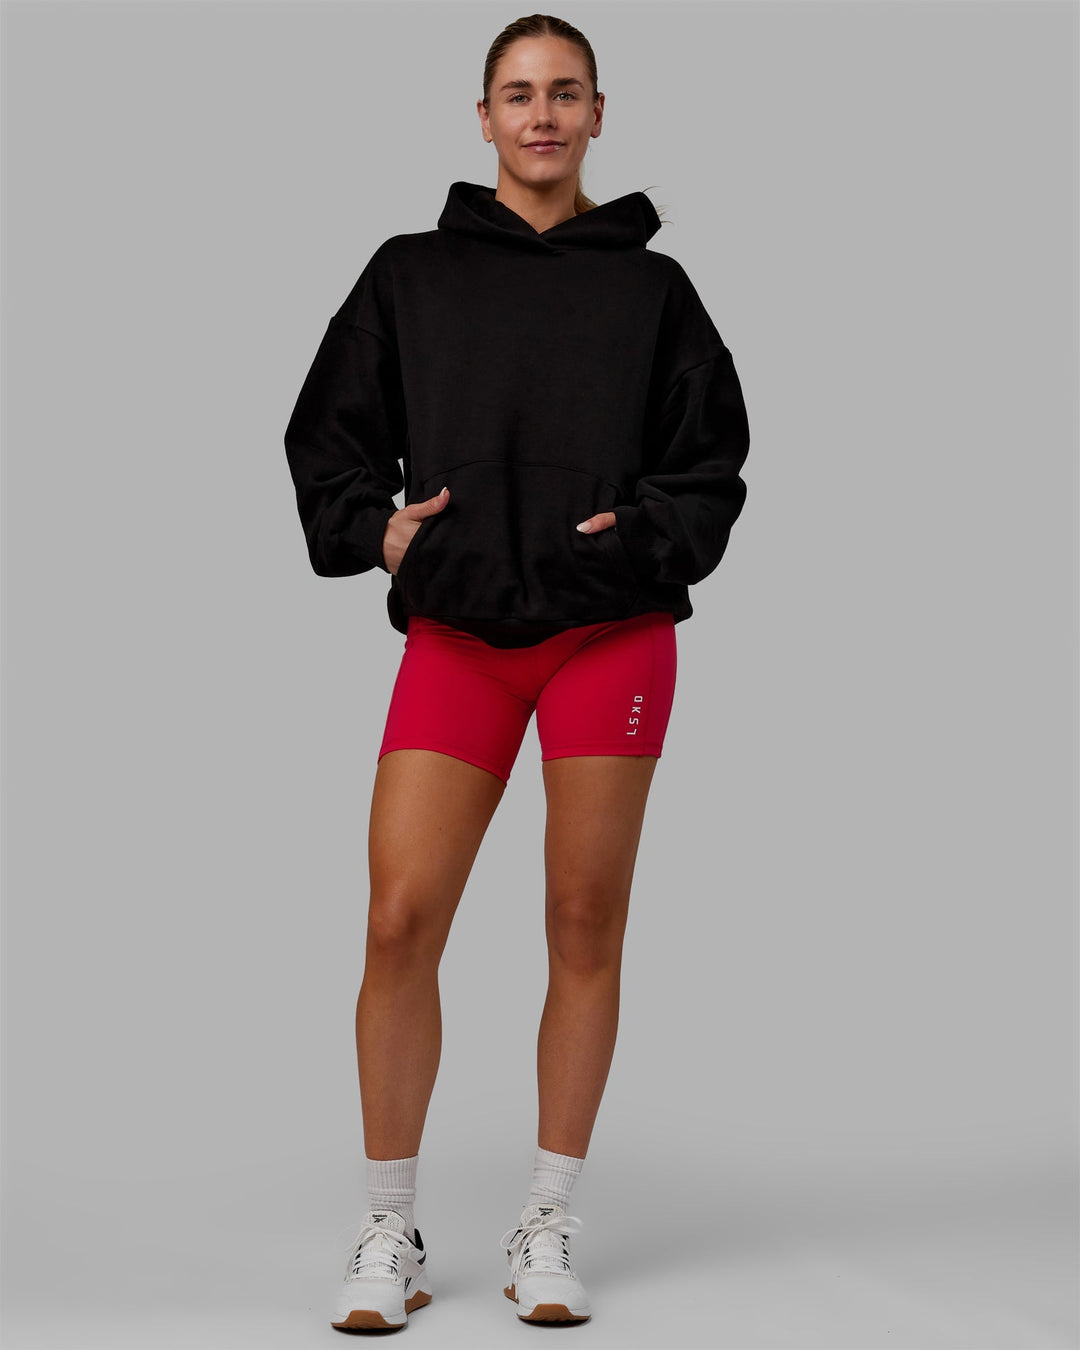 Woman wearing Unisex Lifting Club Hoodie Oversize - Black-Red